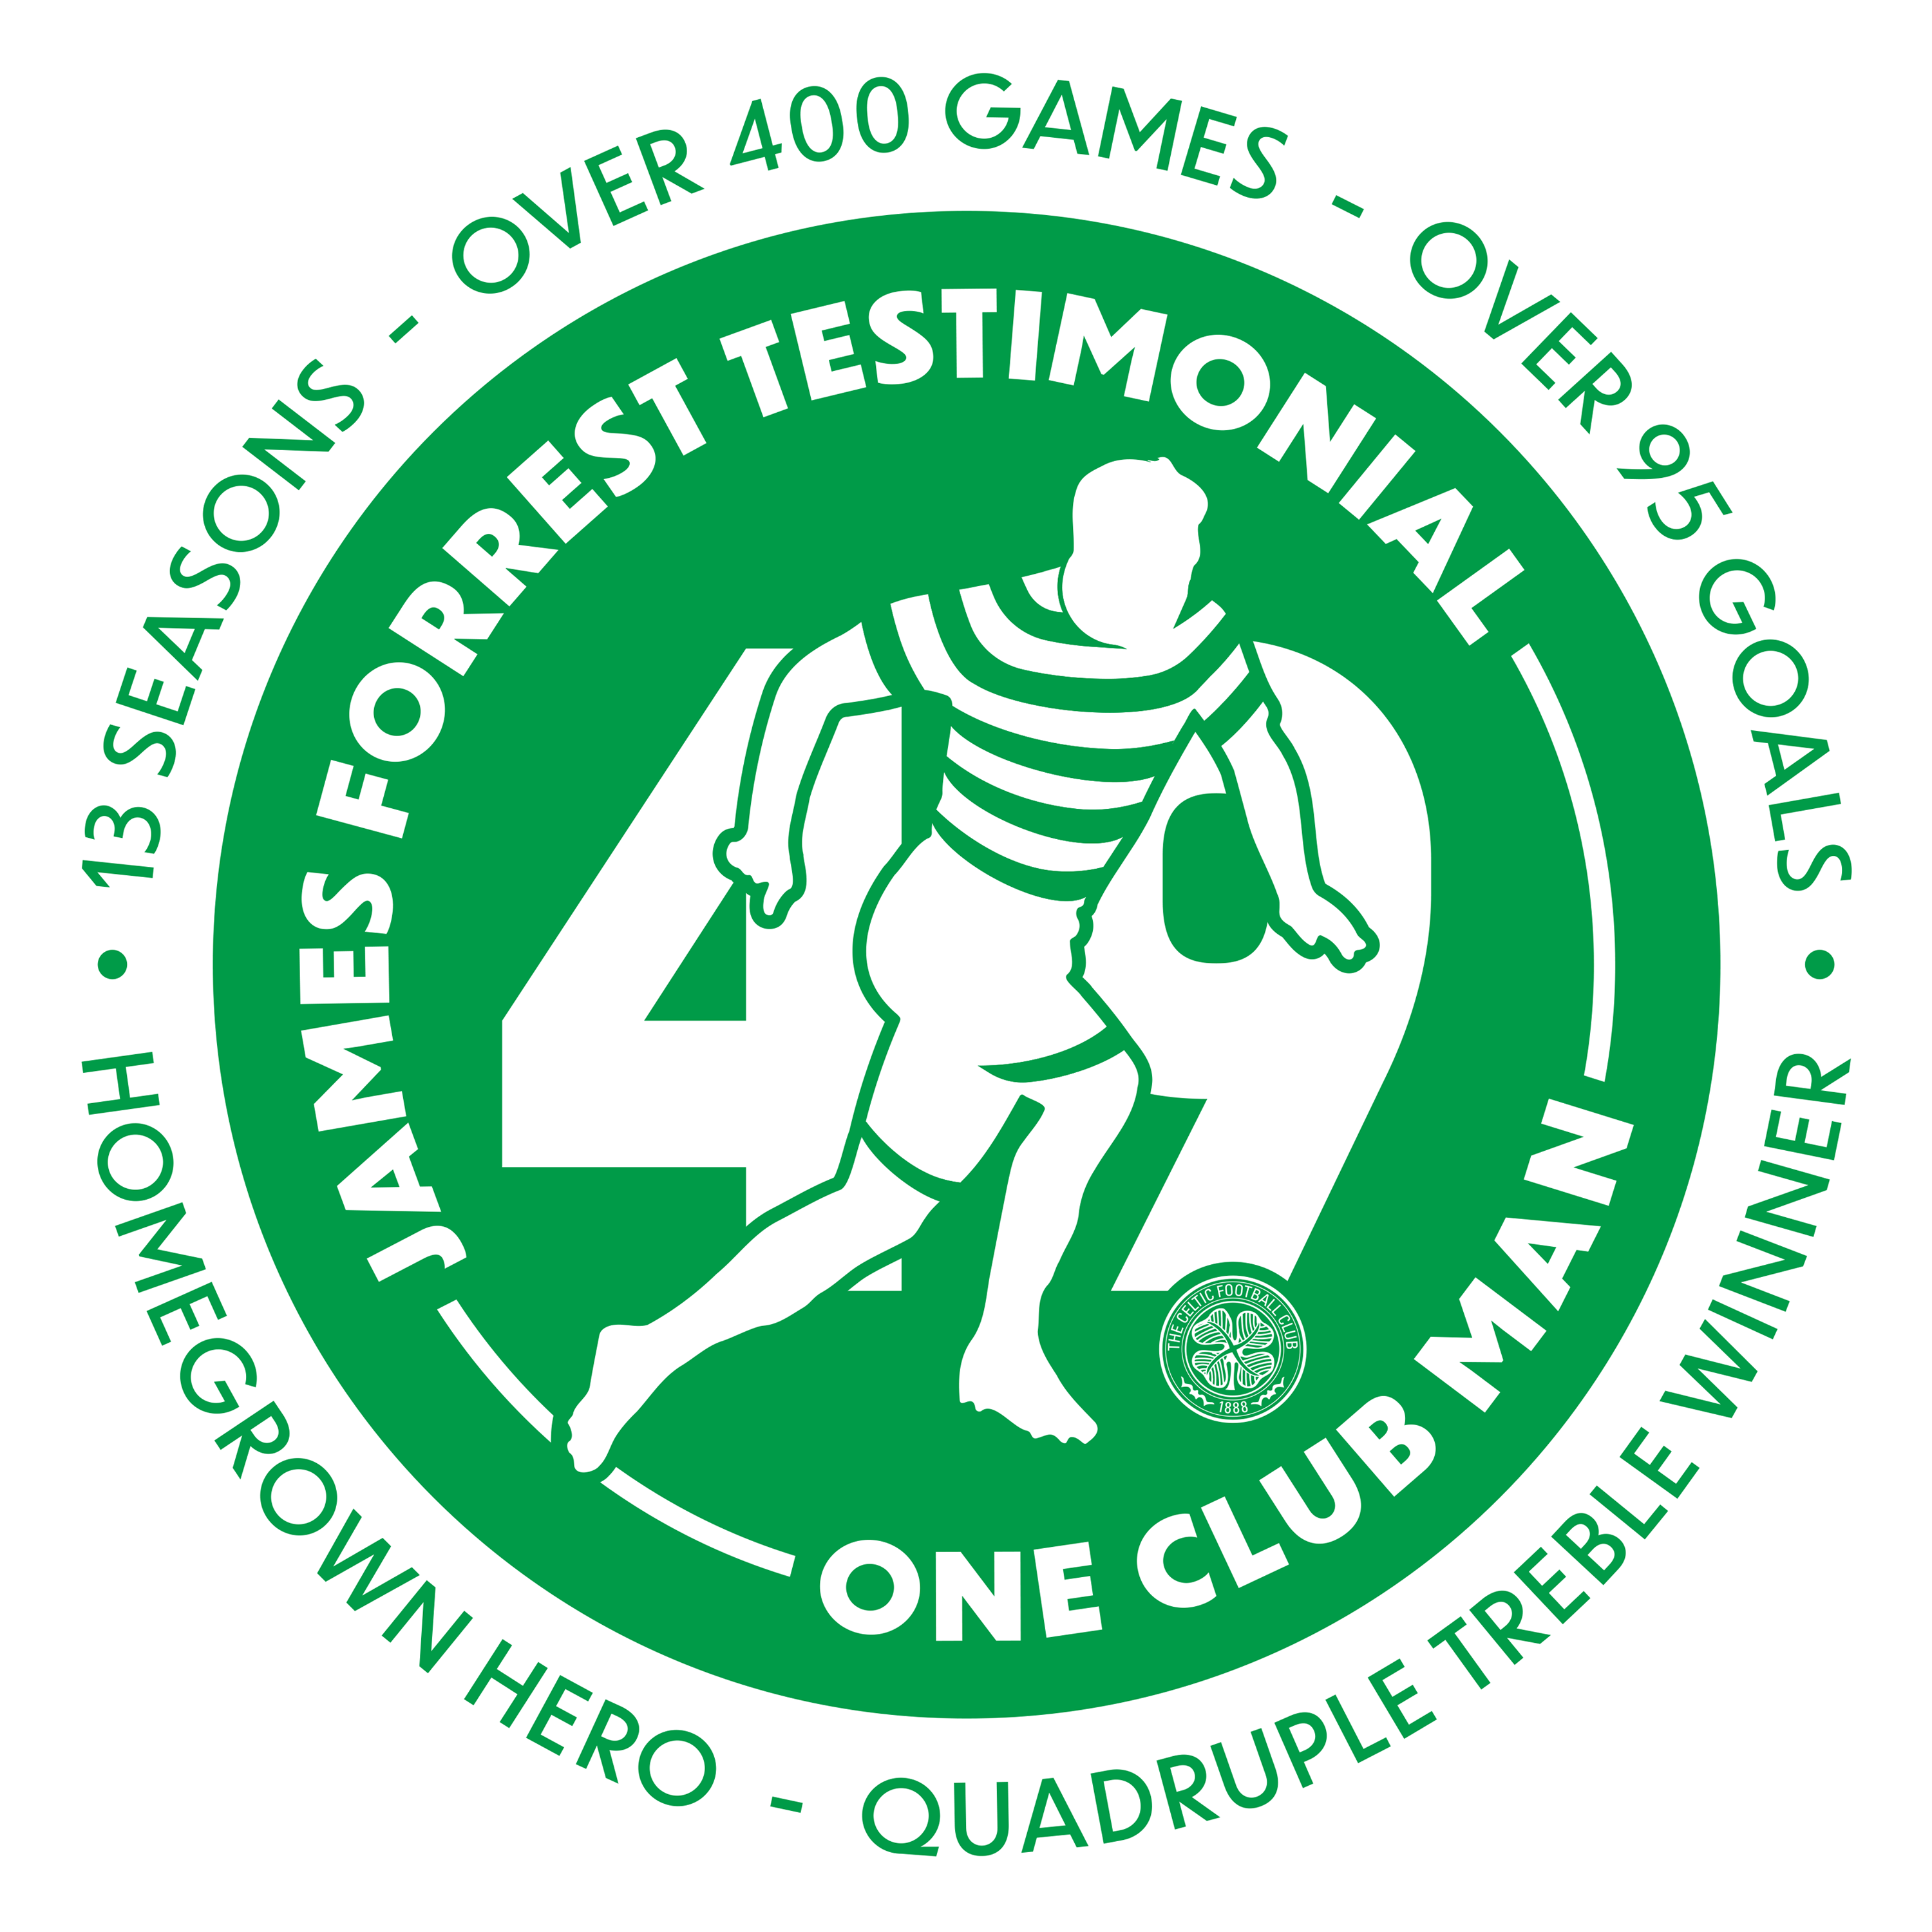 Official Celtic Football Club Website